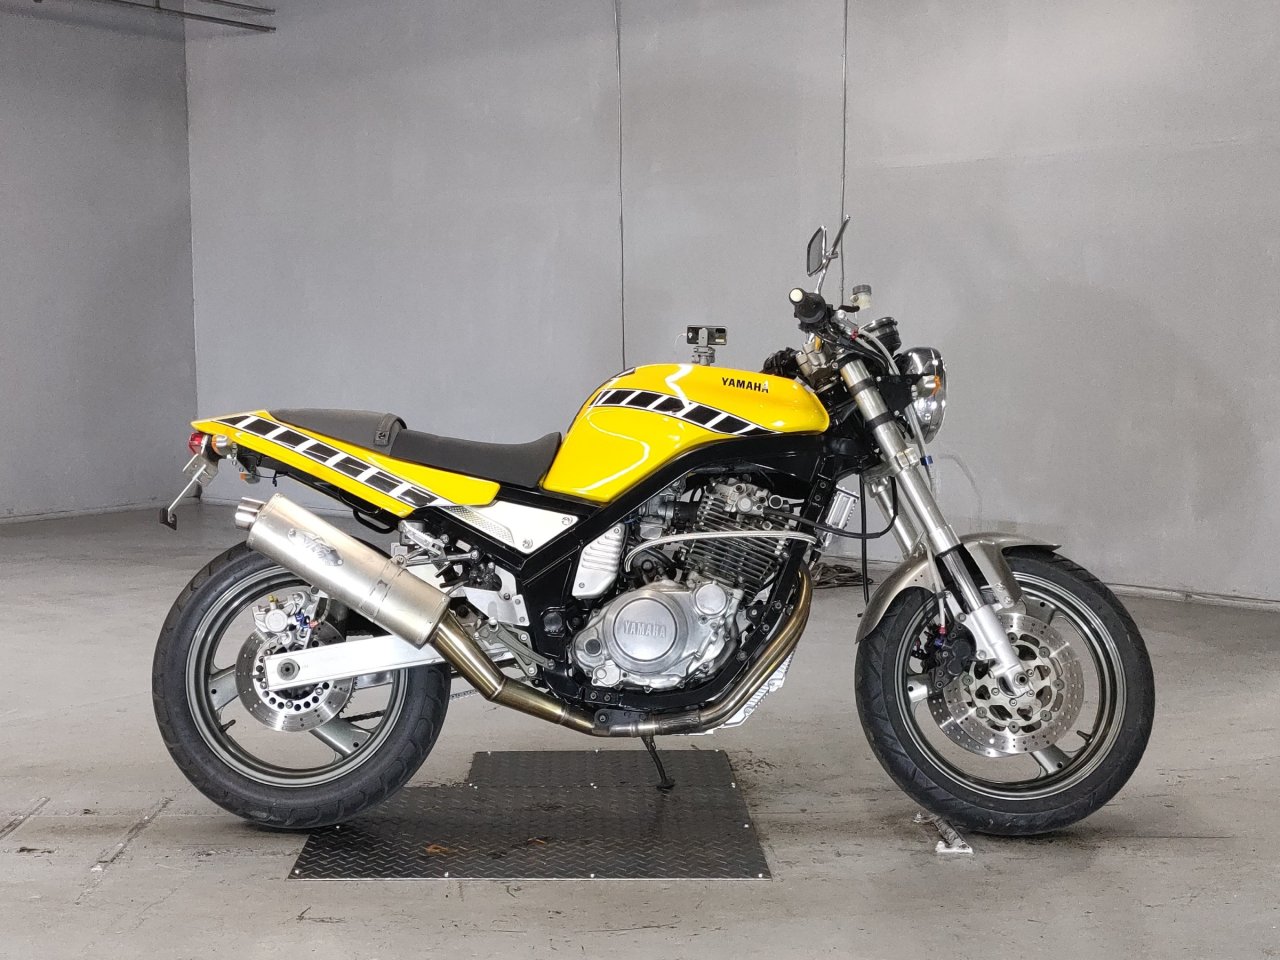 Yamaha SRX400 - Adamoto - Motorcycles from Japan